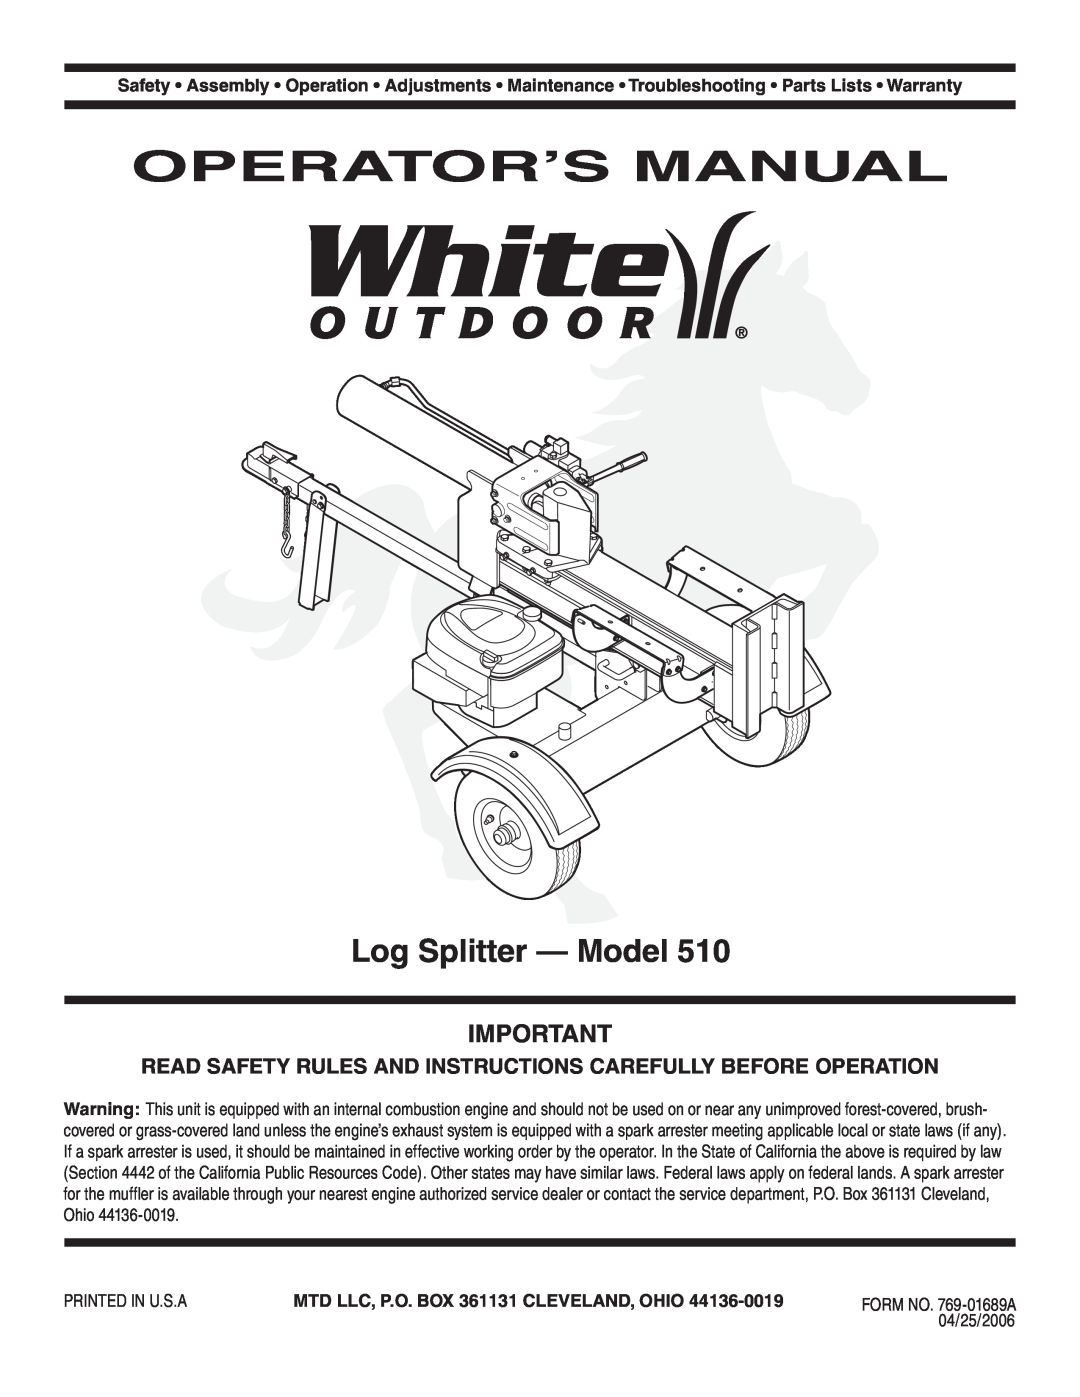 MTD 510 warranty Operator’S Manual, Log Splitter - Model, MTD LLC, P.O. BOX 361131 CLEVELAND, OHIO 